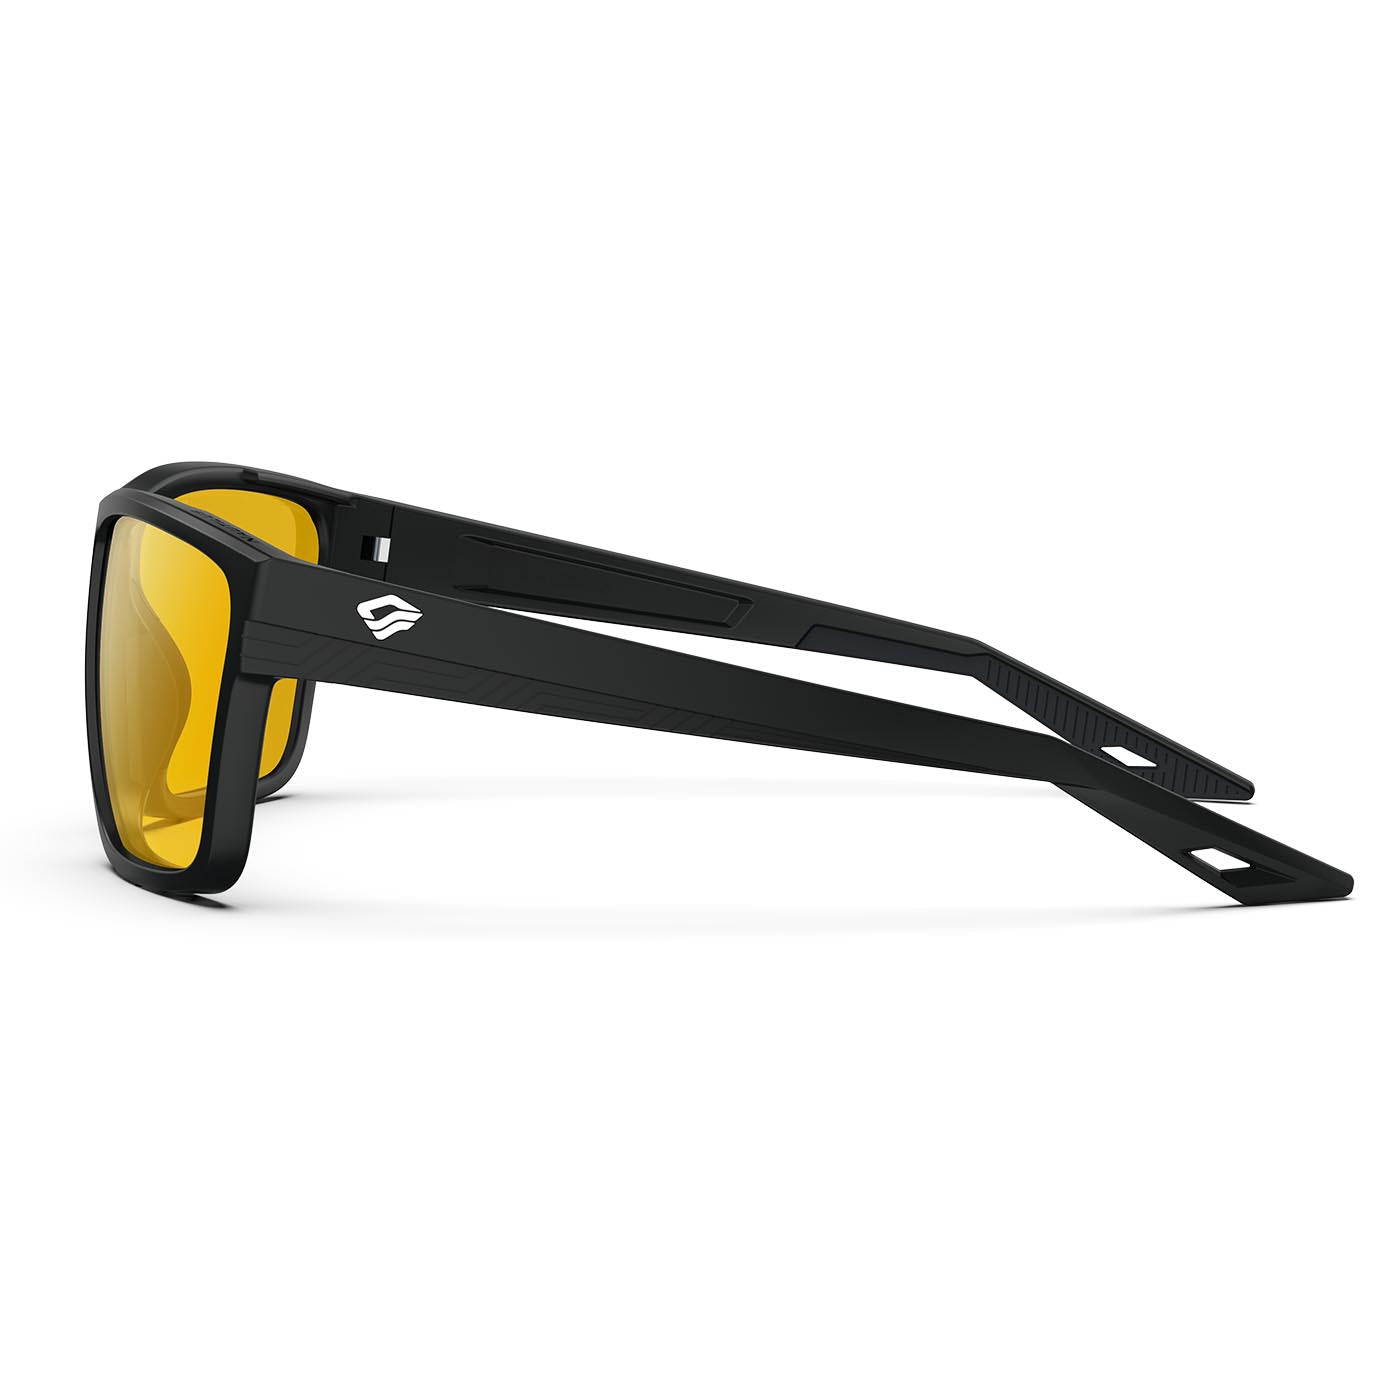 GetUSCart- TOREGE Polarized Sports Sunglasses with 5